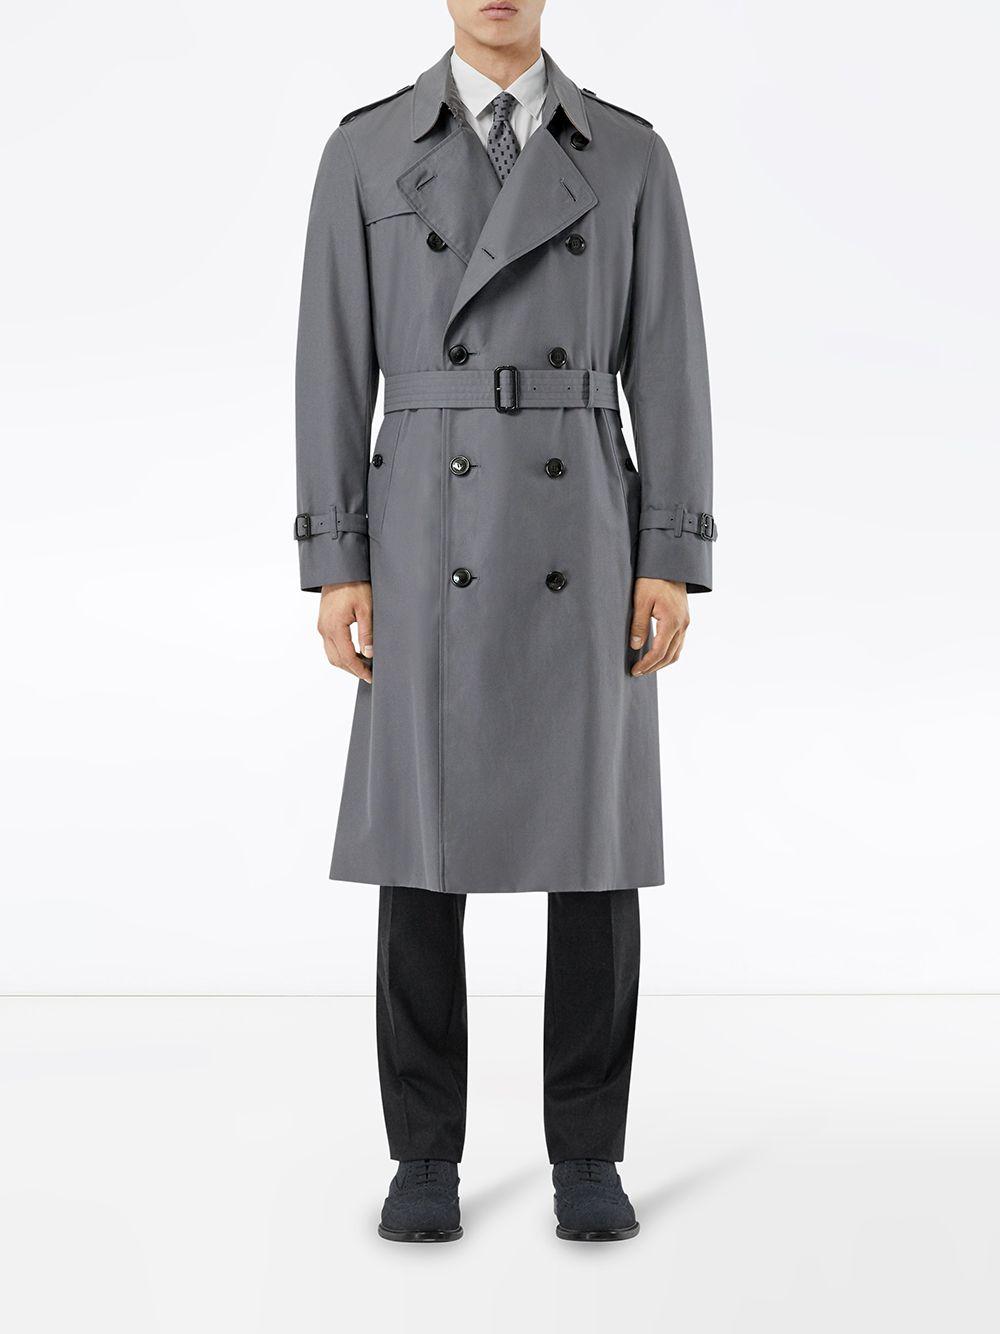 Burberry Chelsea Heritage Long Trench Coat in Grey (Gray) for Men - Lyst